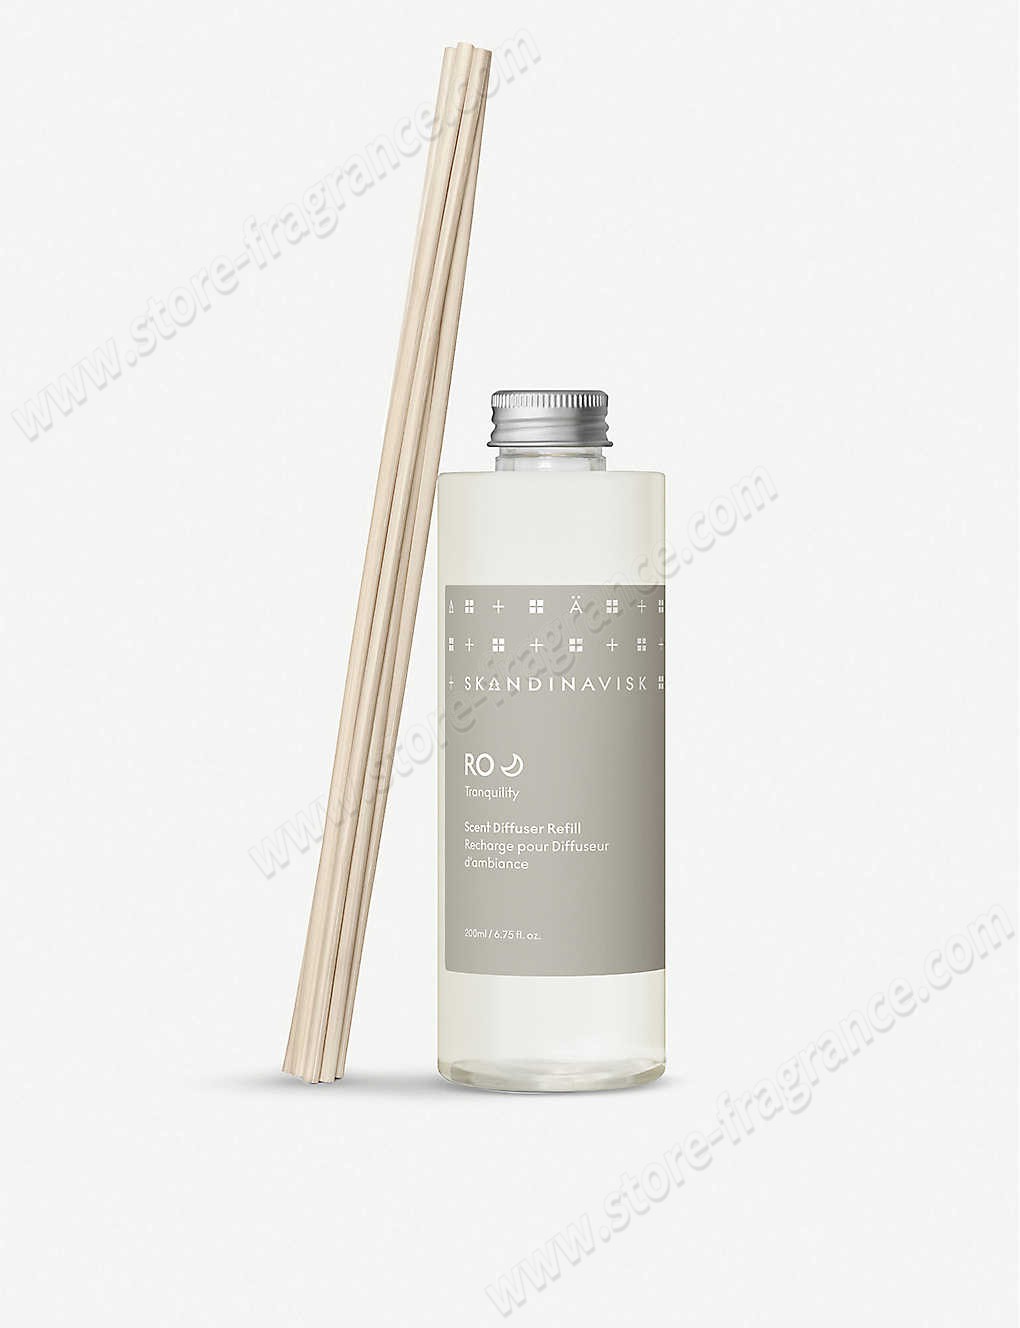 SKANDINAVISK/RO scented reed diffuser refill 200ml ✿ Discount Store - -0